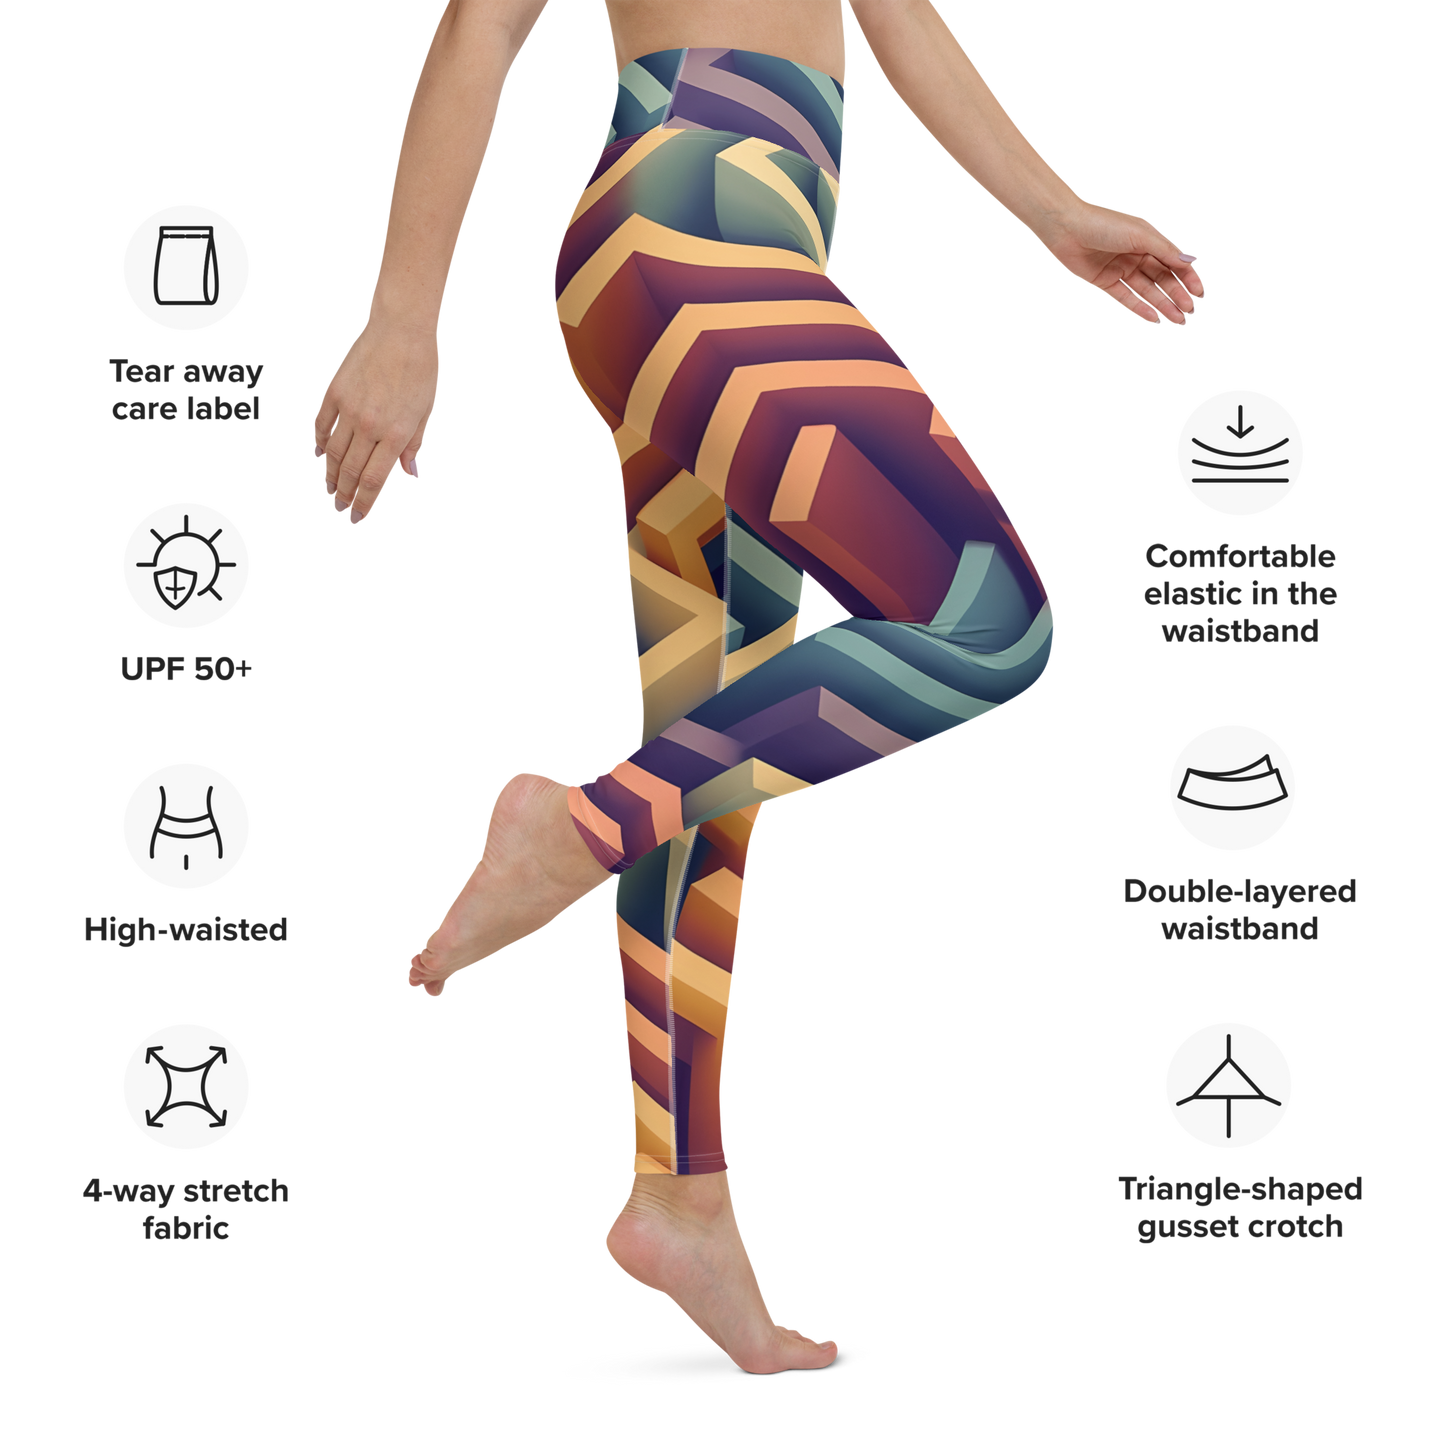 3D Maze Illusion | 3D Patterns | All-Over Print Yoga Leggings - #3